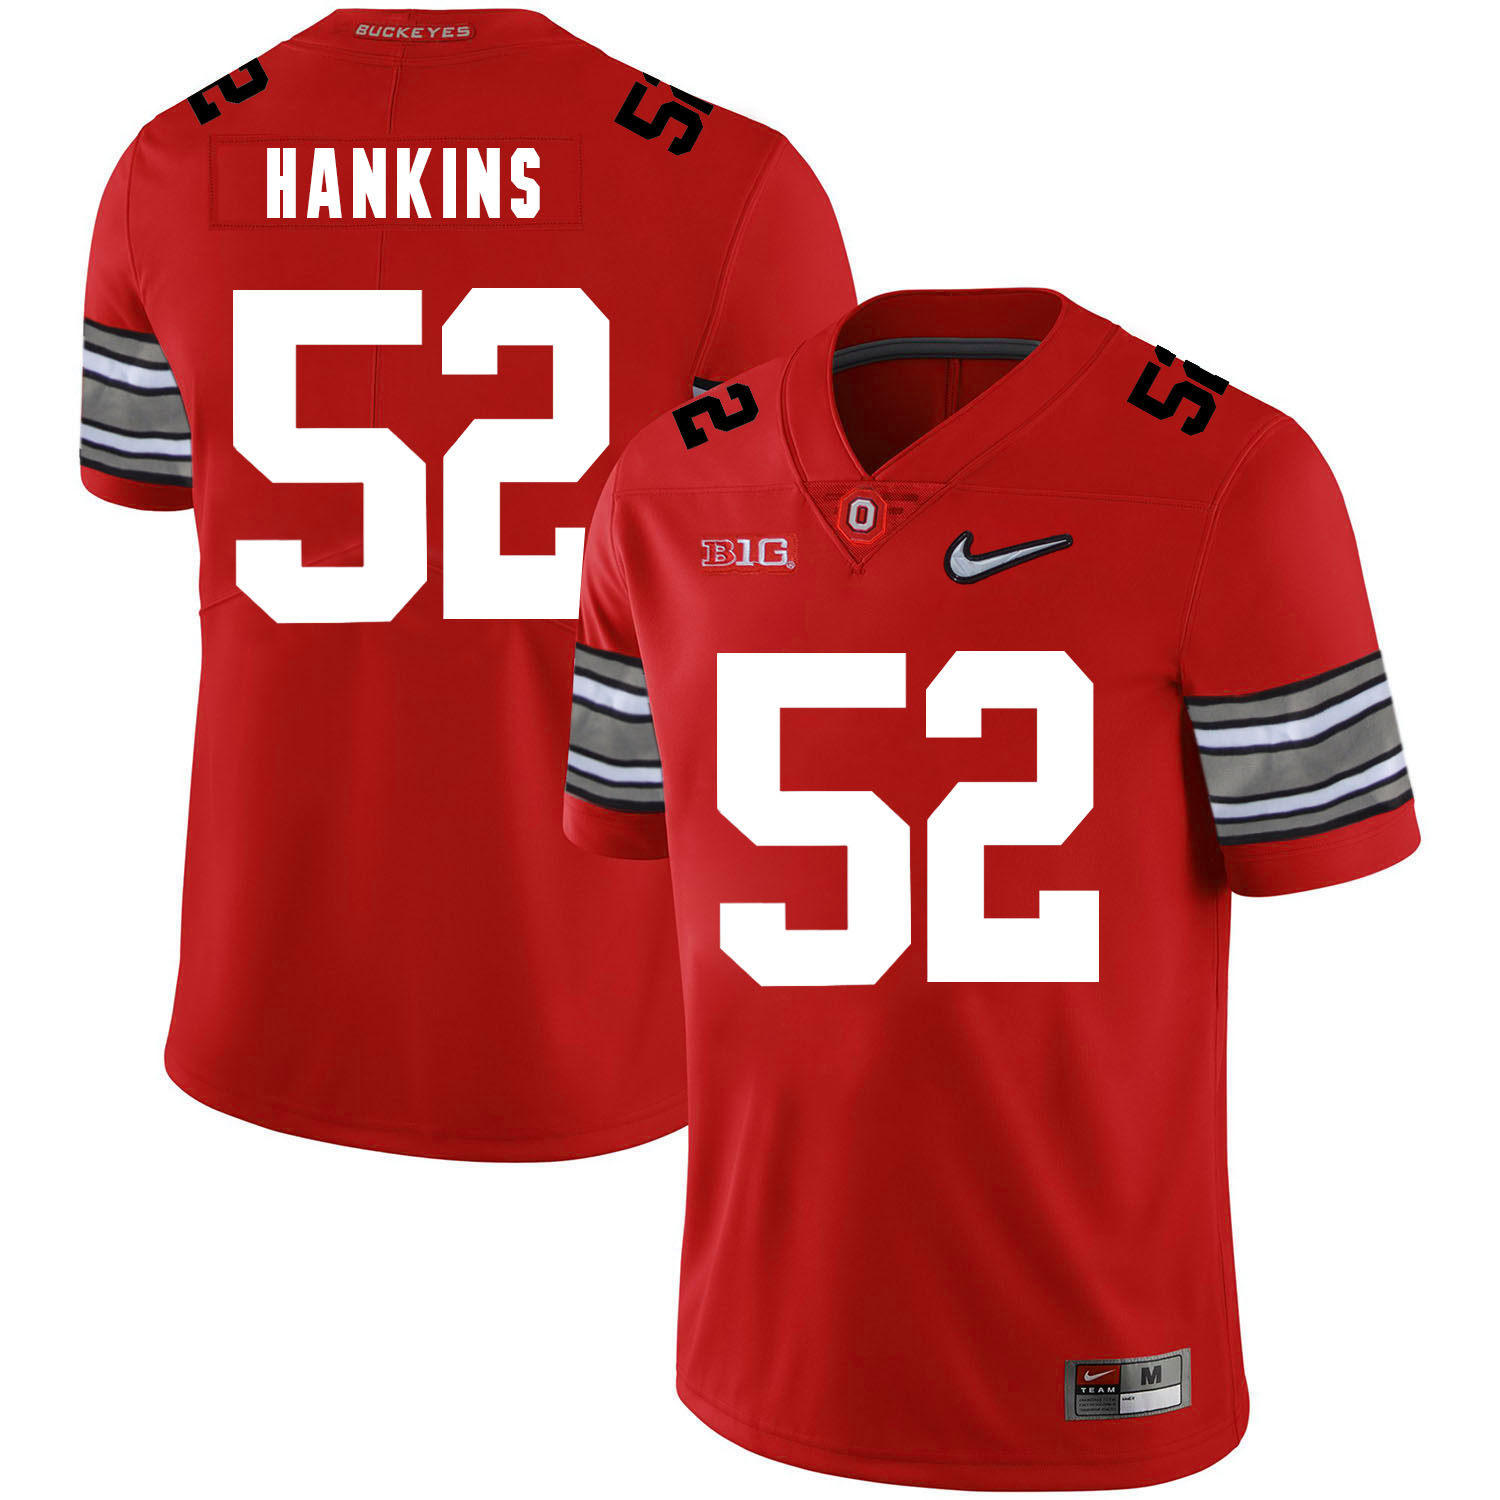 Ohio State Buckeyes 52 Johnathan Hankins Red Diamond Nike Logo College Football Jersey